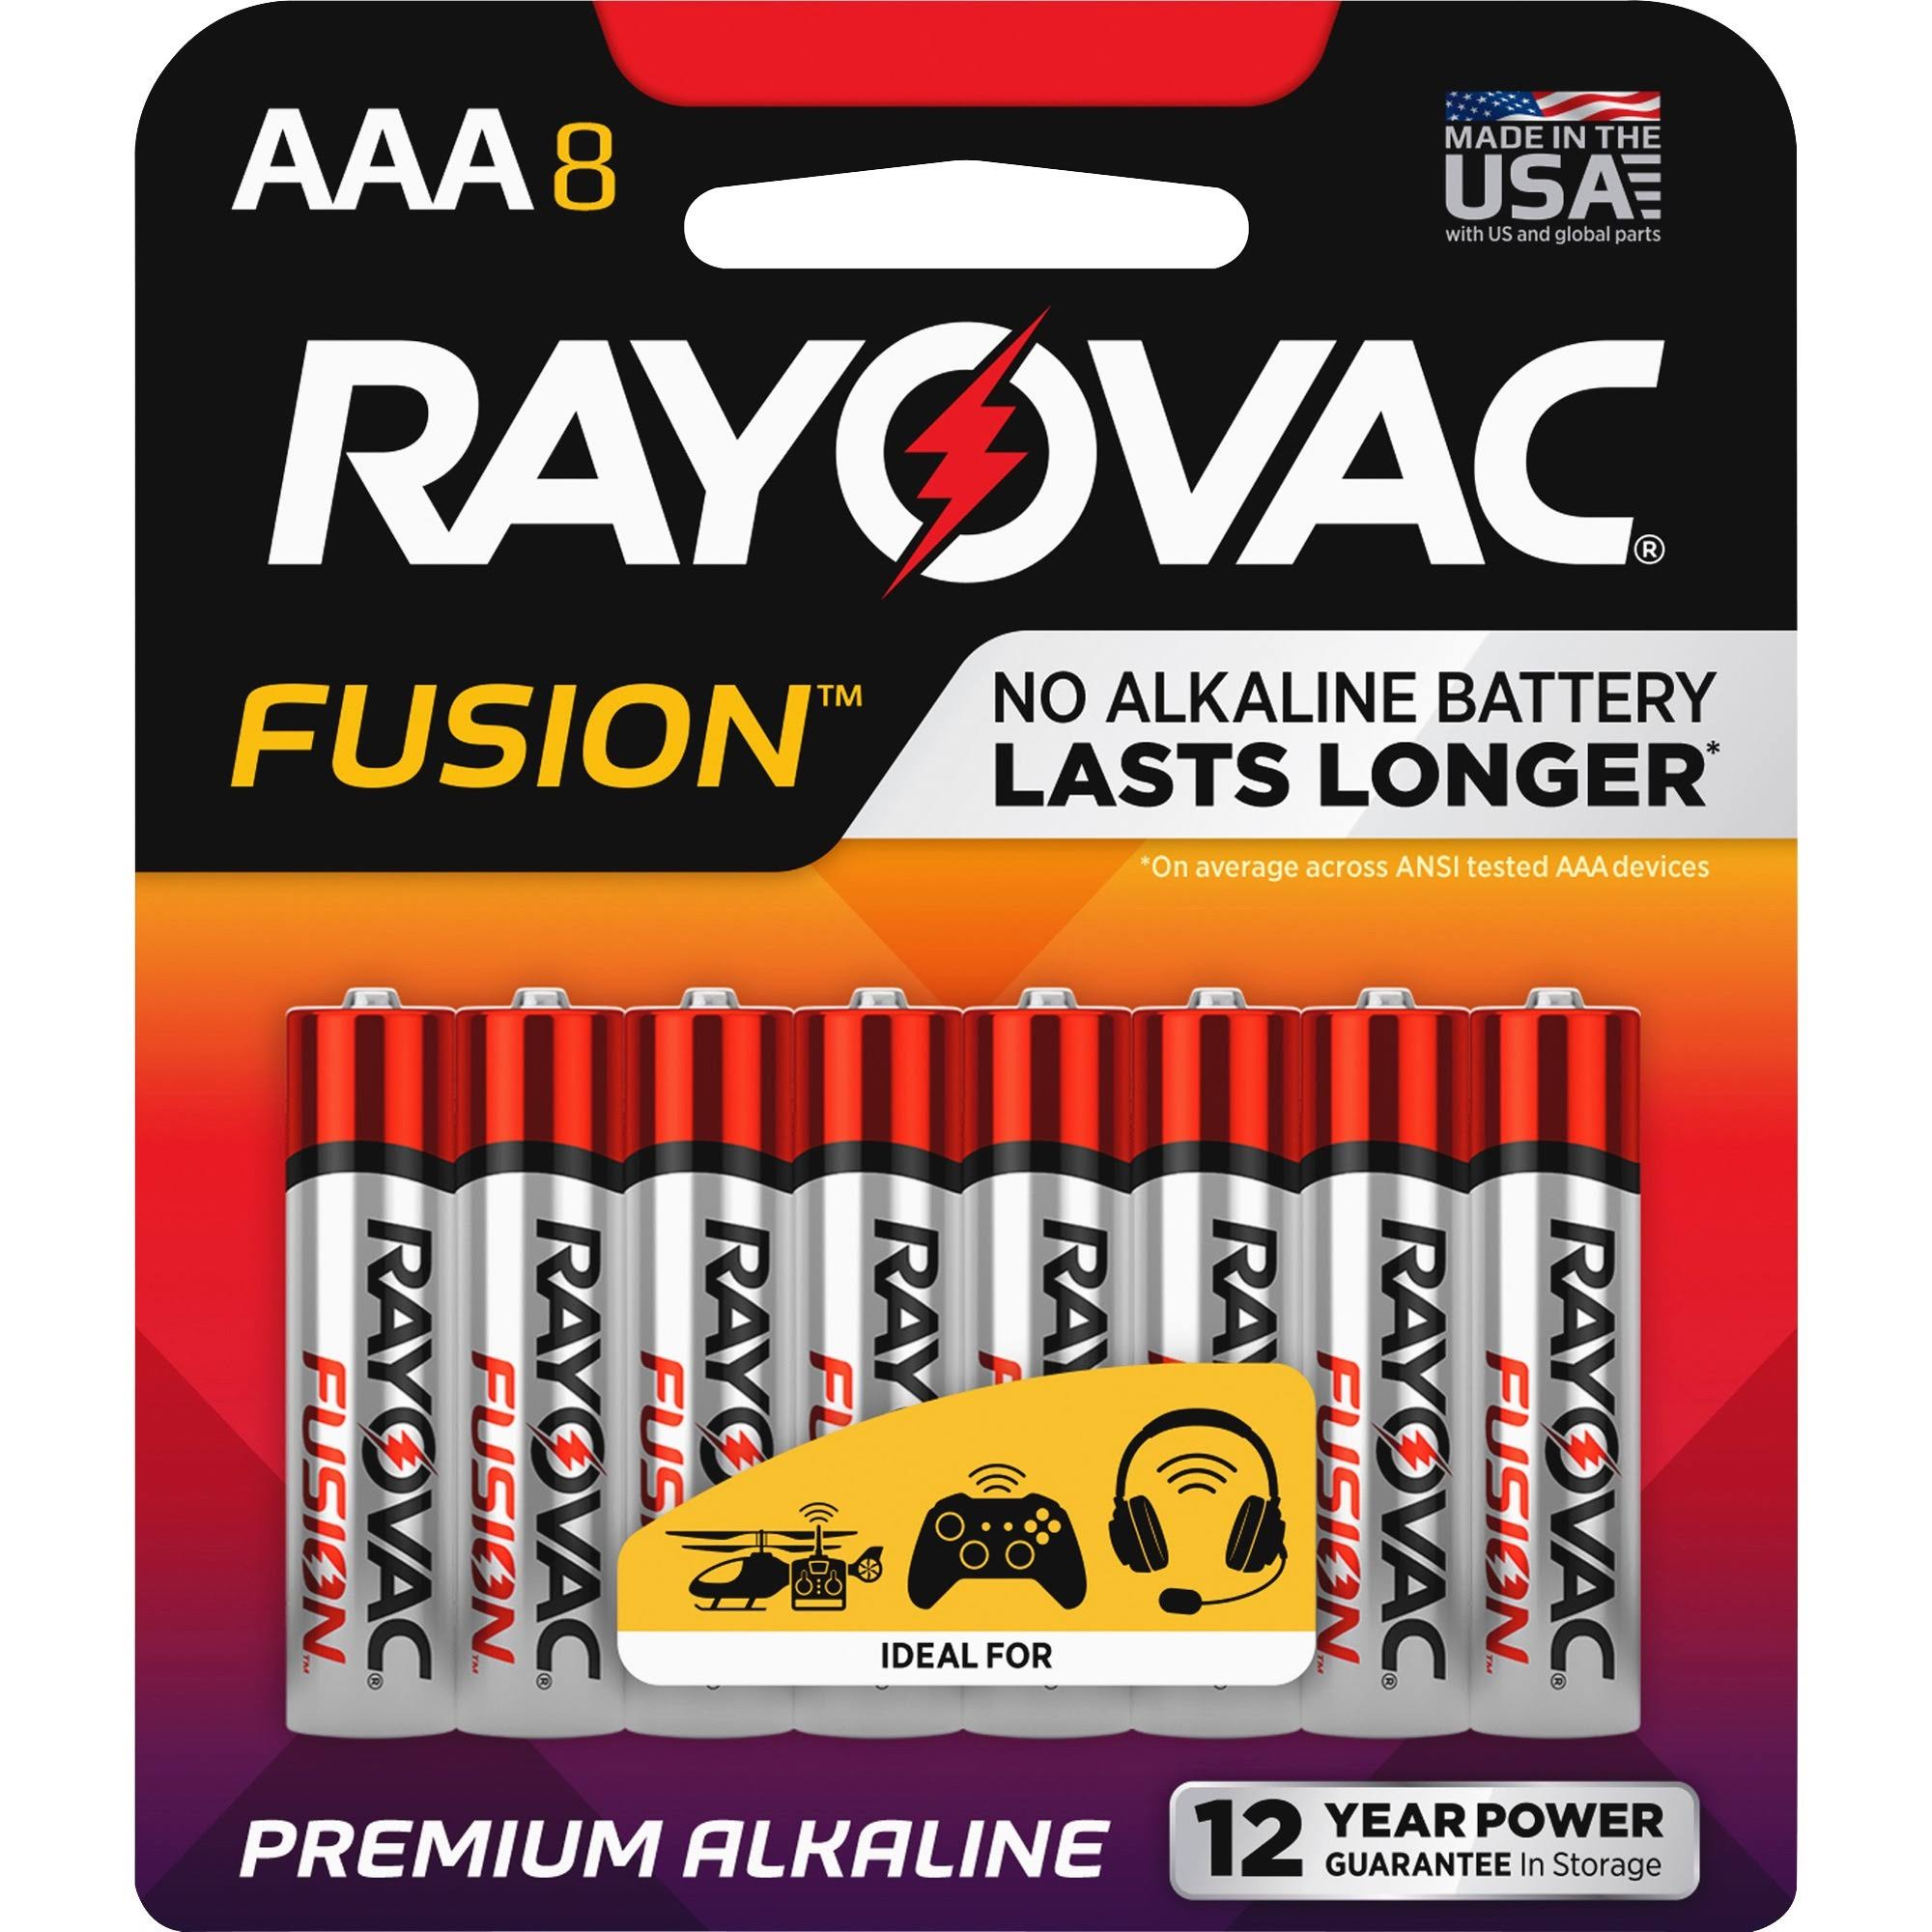 Rayovac Fusion Performance Alkaline Batteries - Aaa, 8pk